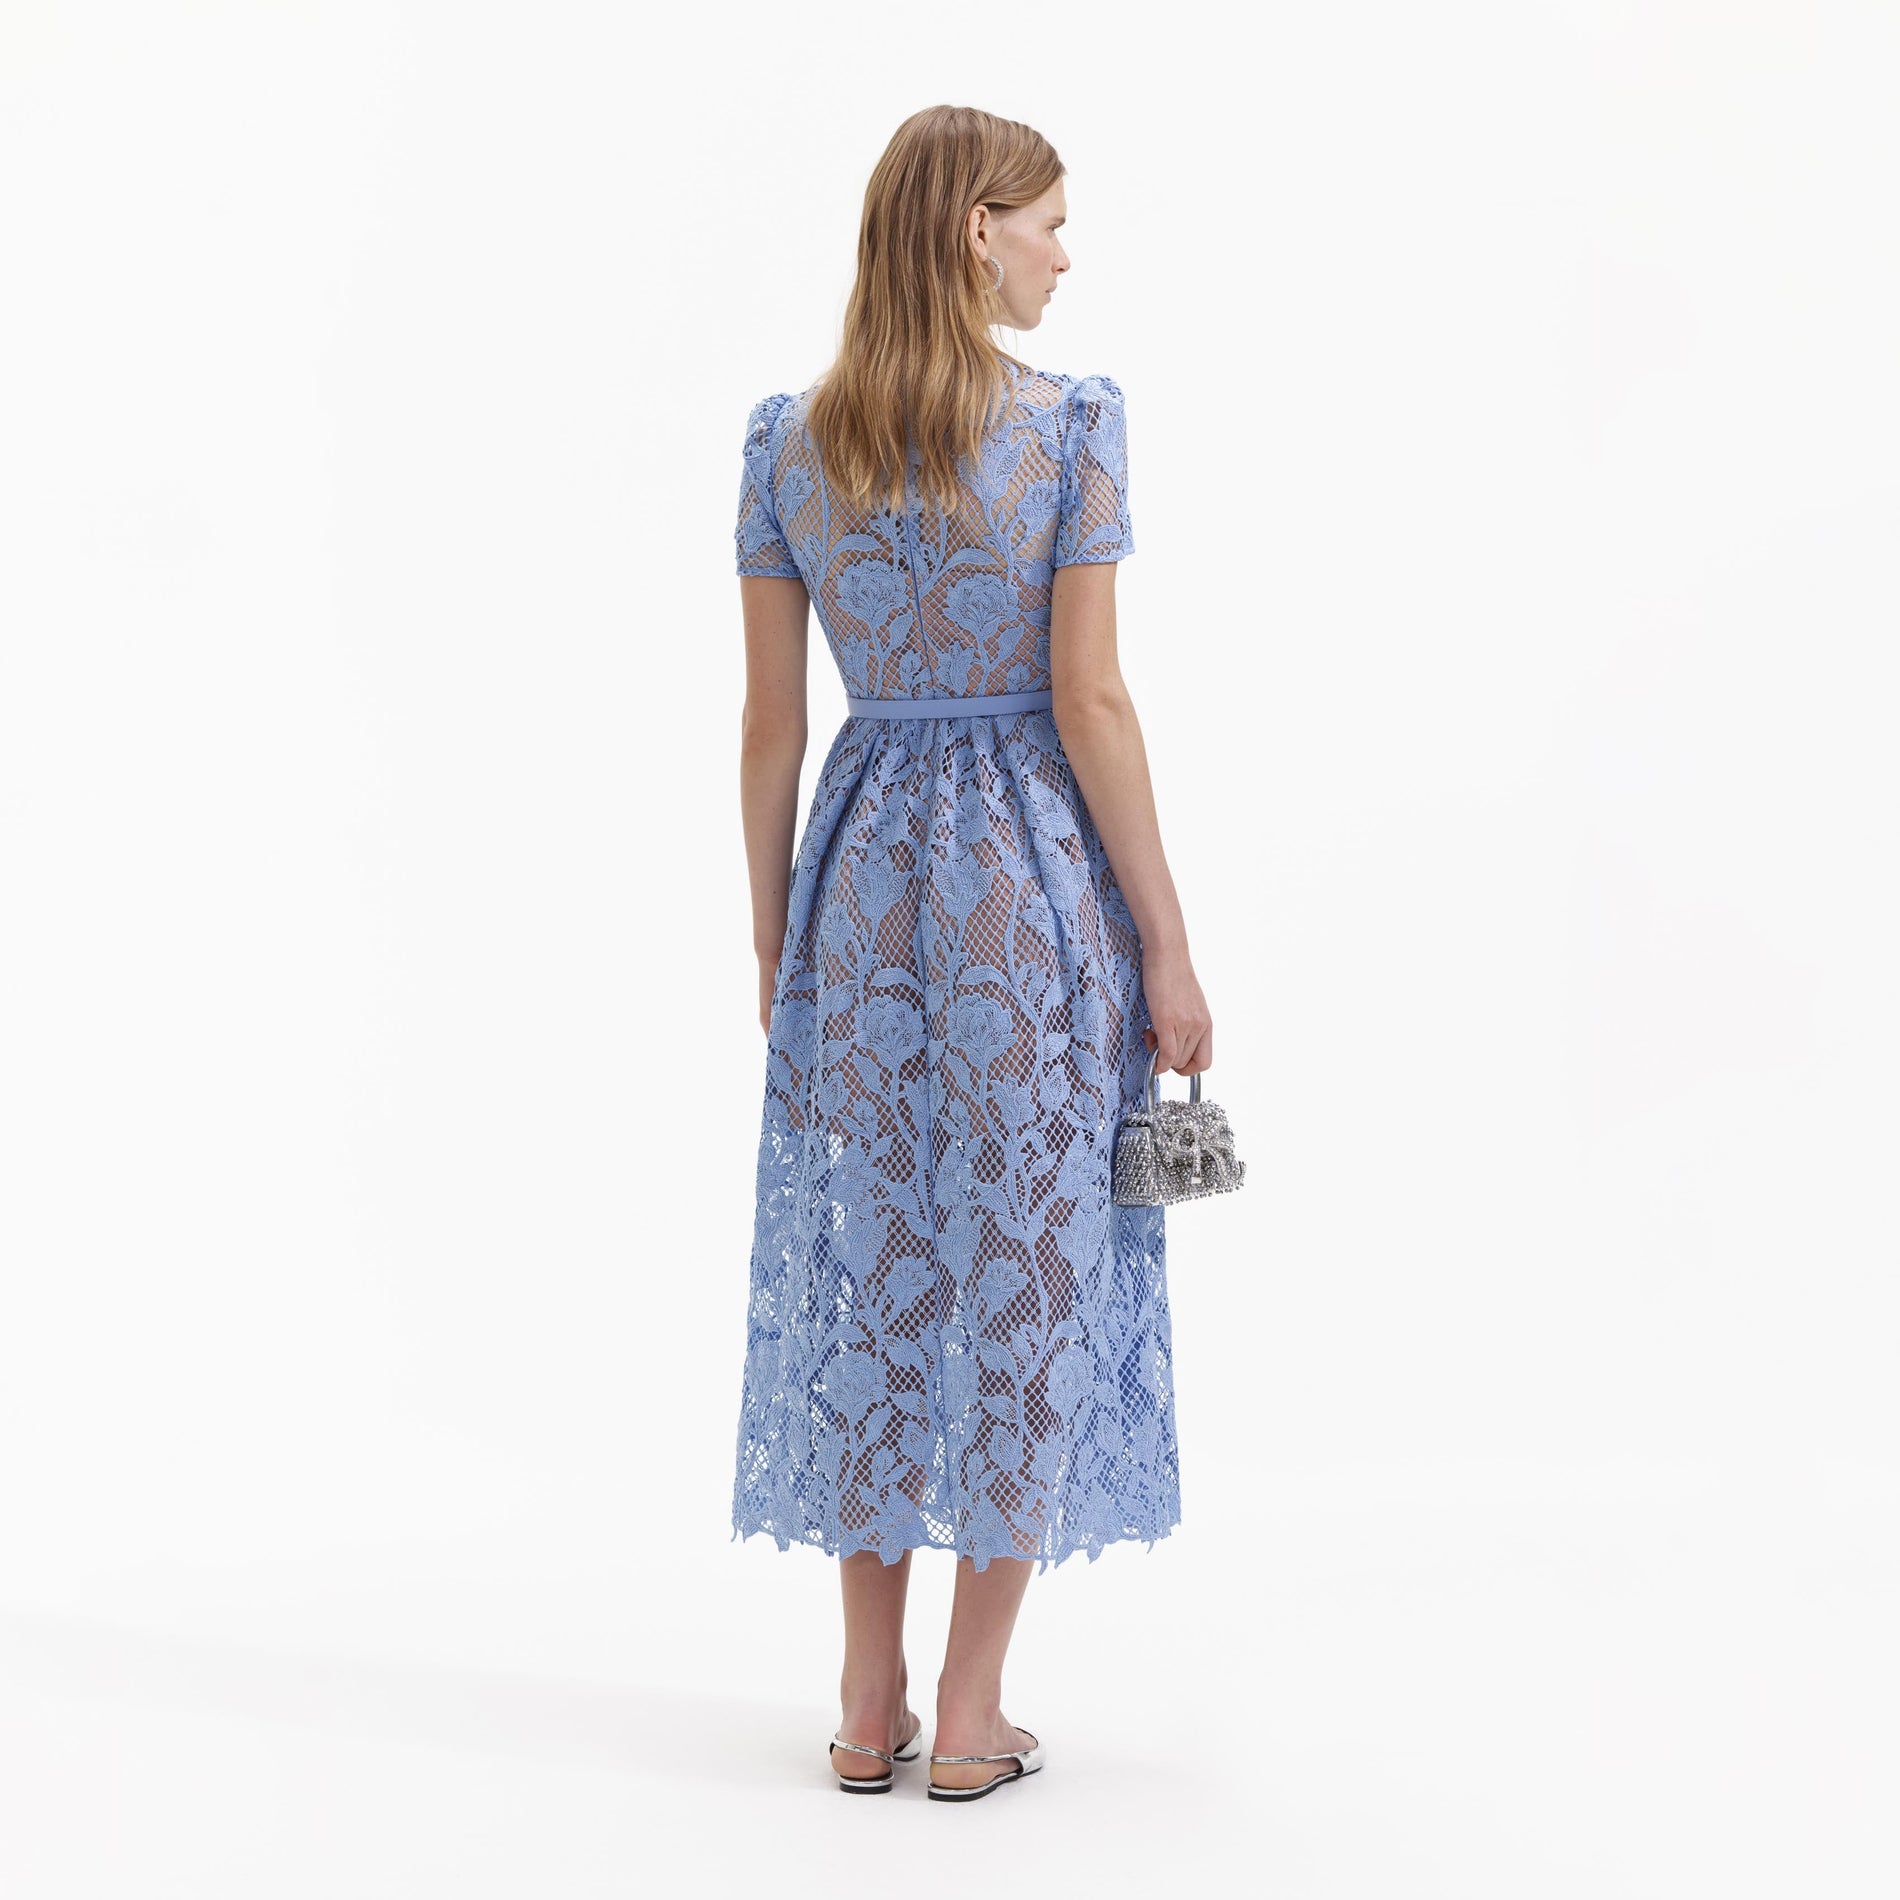 A Woman wearing the Blue Lily Lace Midi Dress